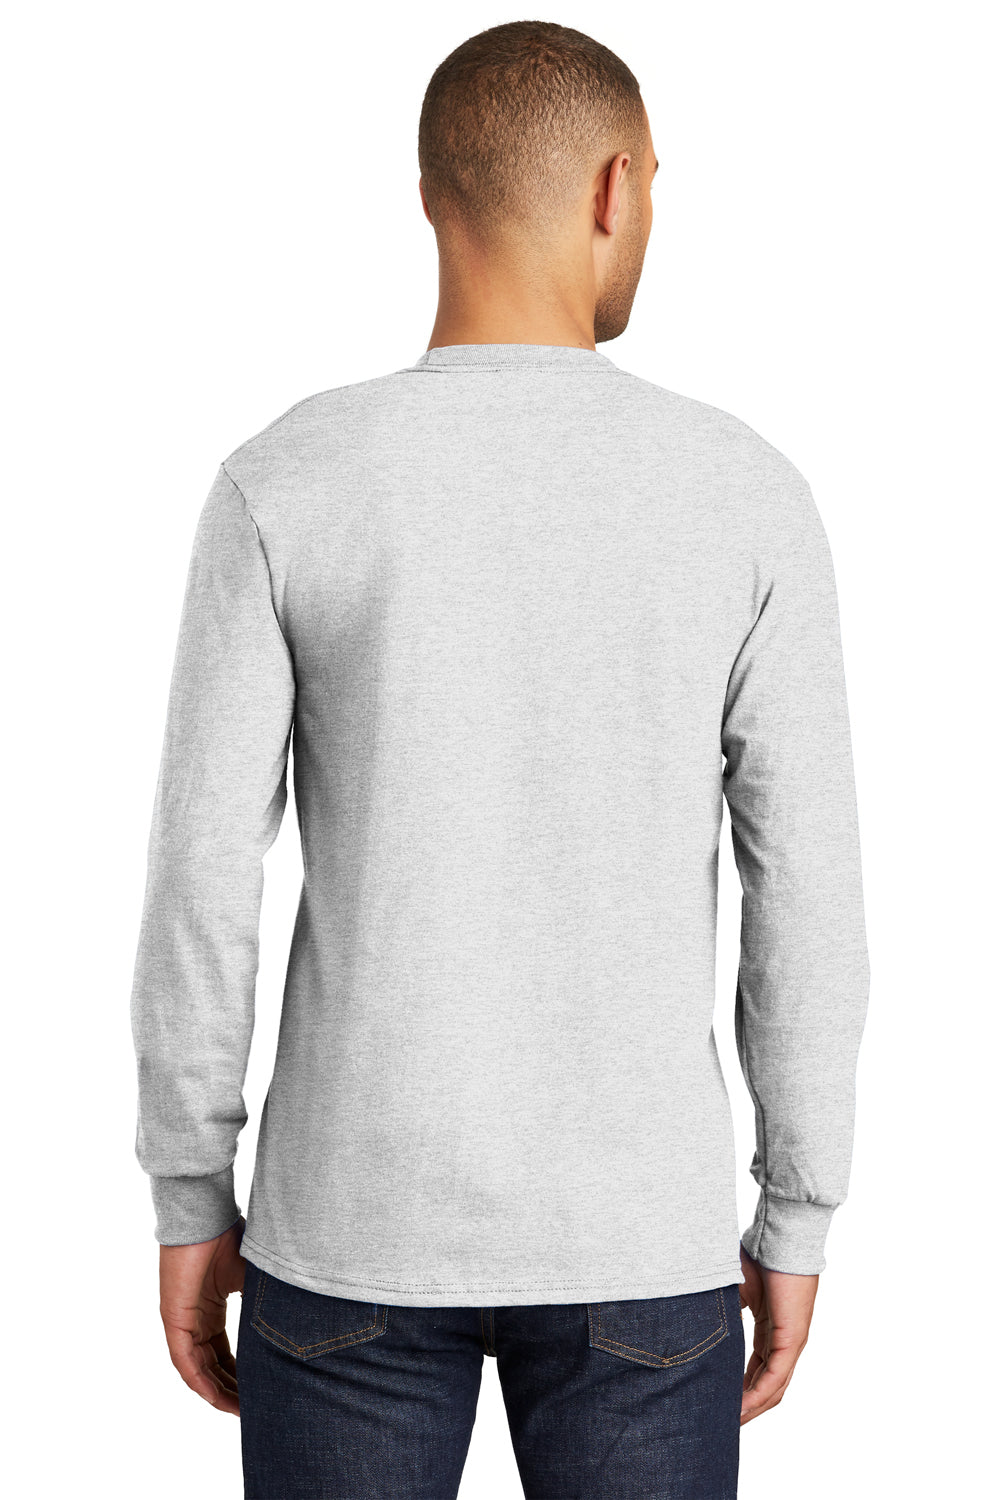 Port & Company PC61LSP Mens Essential Long Sleeve Crewneck T-Shirt w/ Pocket Ash Grey Back